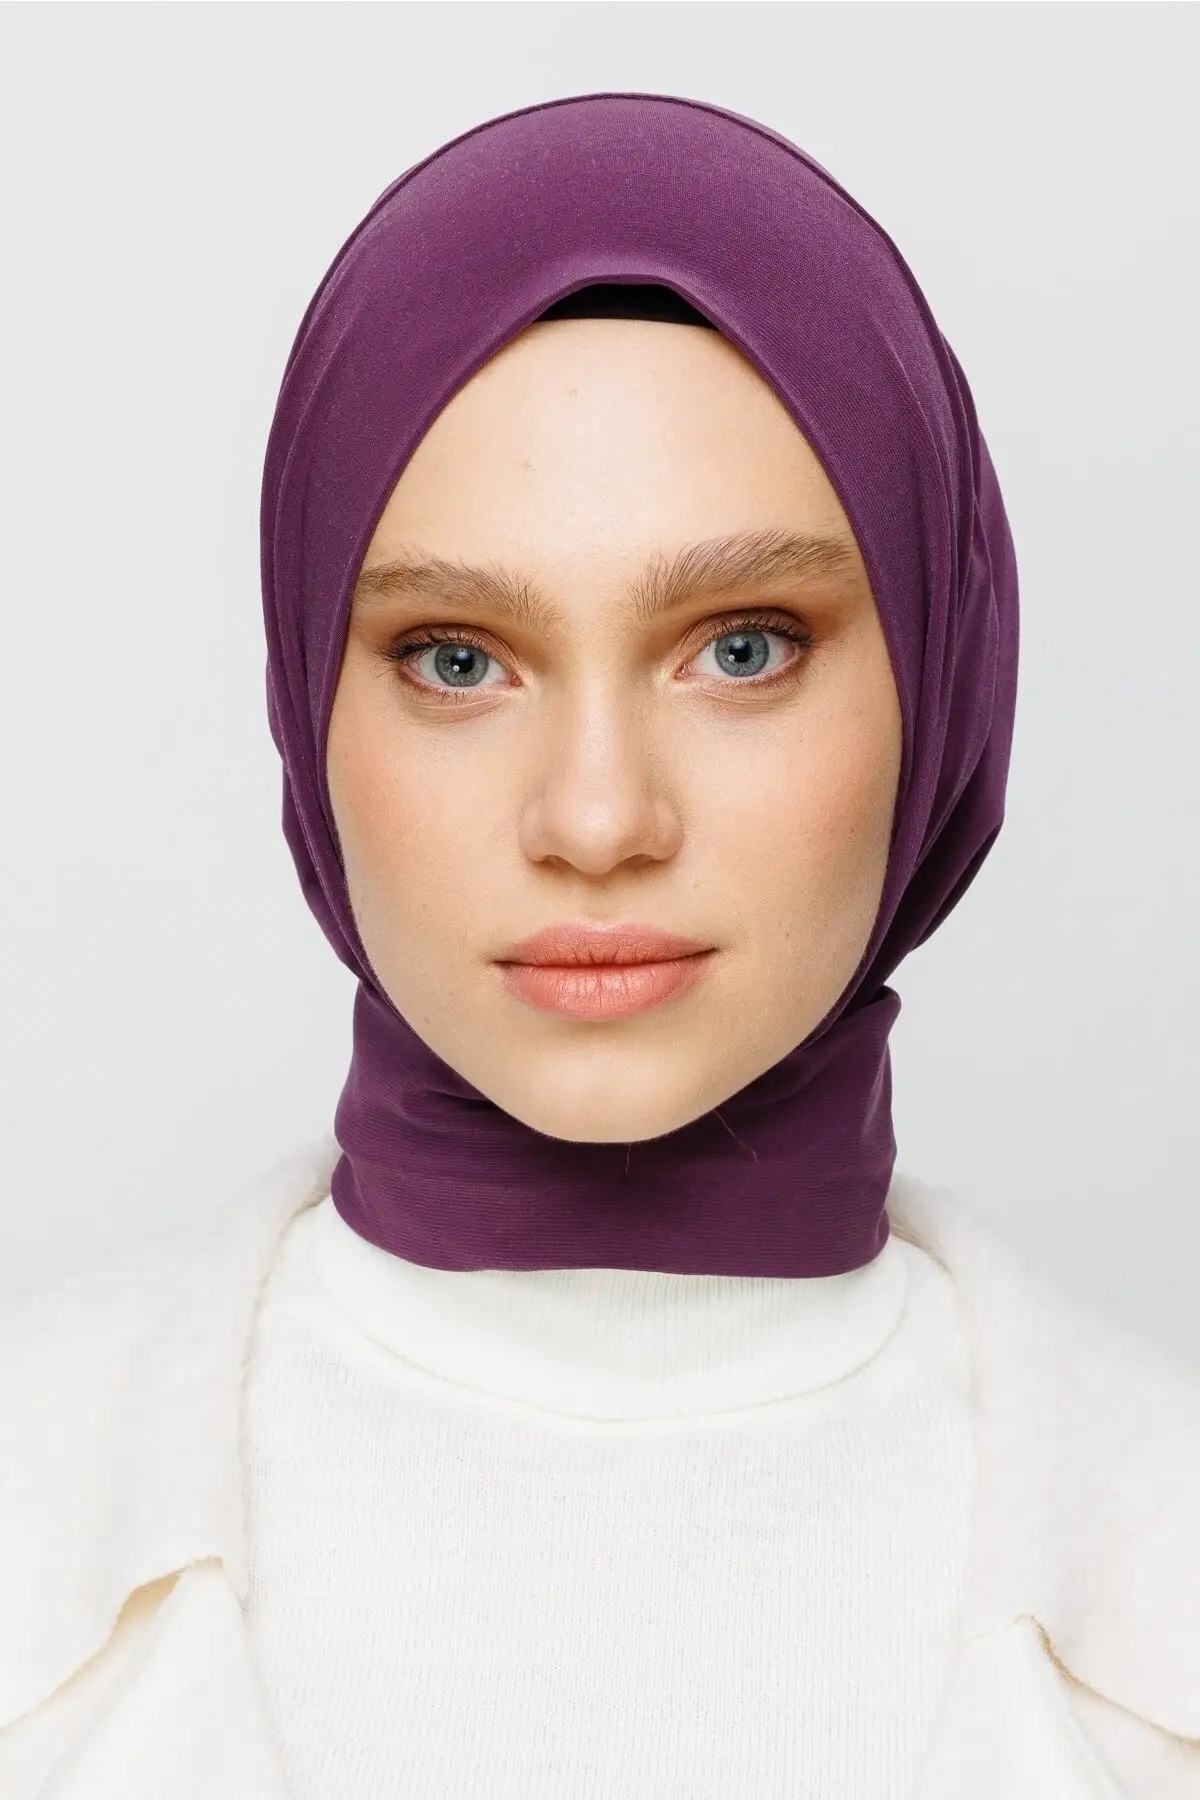 

Women Hijab Lavender Snaps Boyunluk Hijab Shawl Polyester Desensiz Hooded Wrinkling durable Single